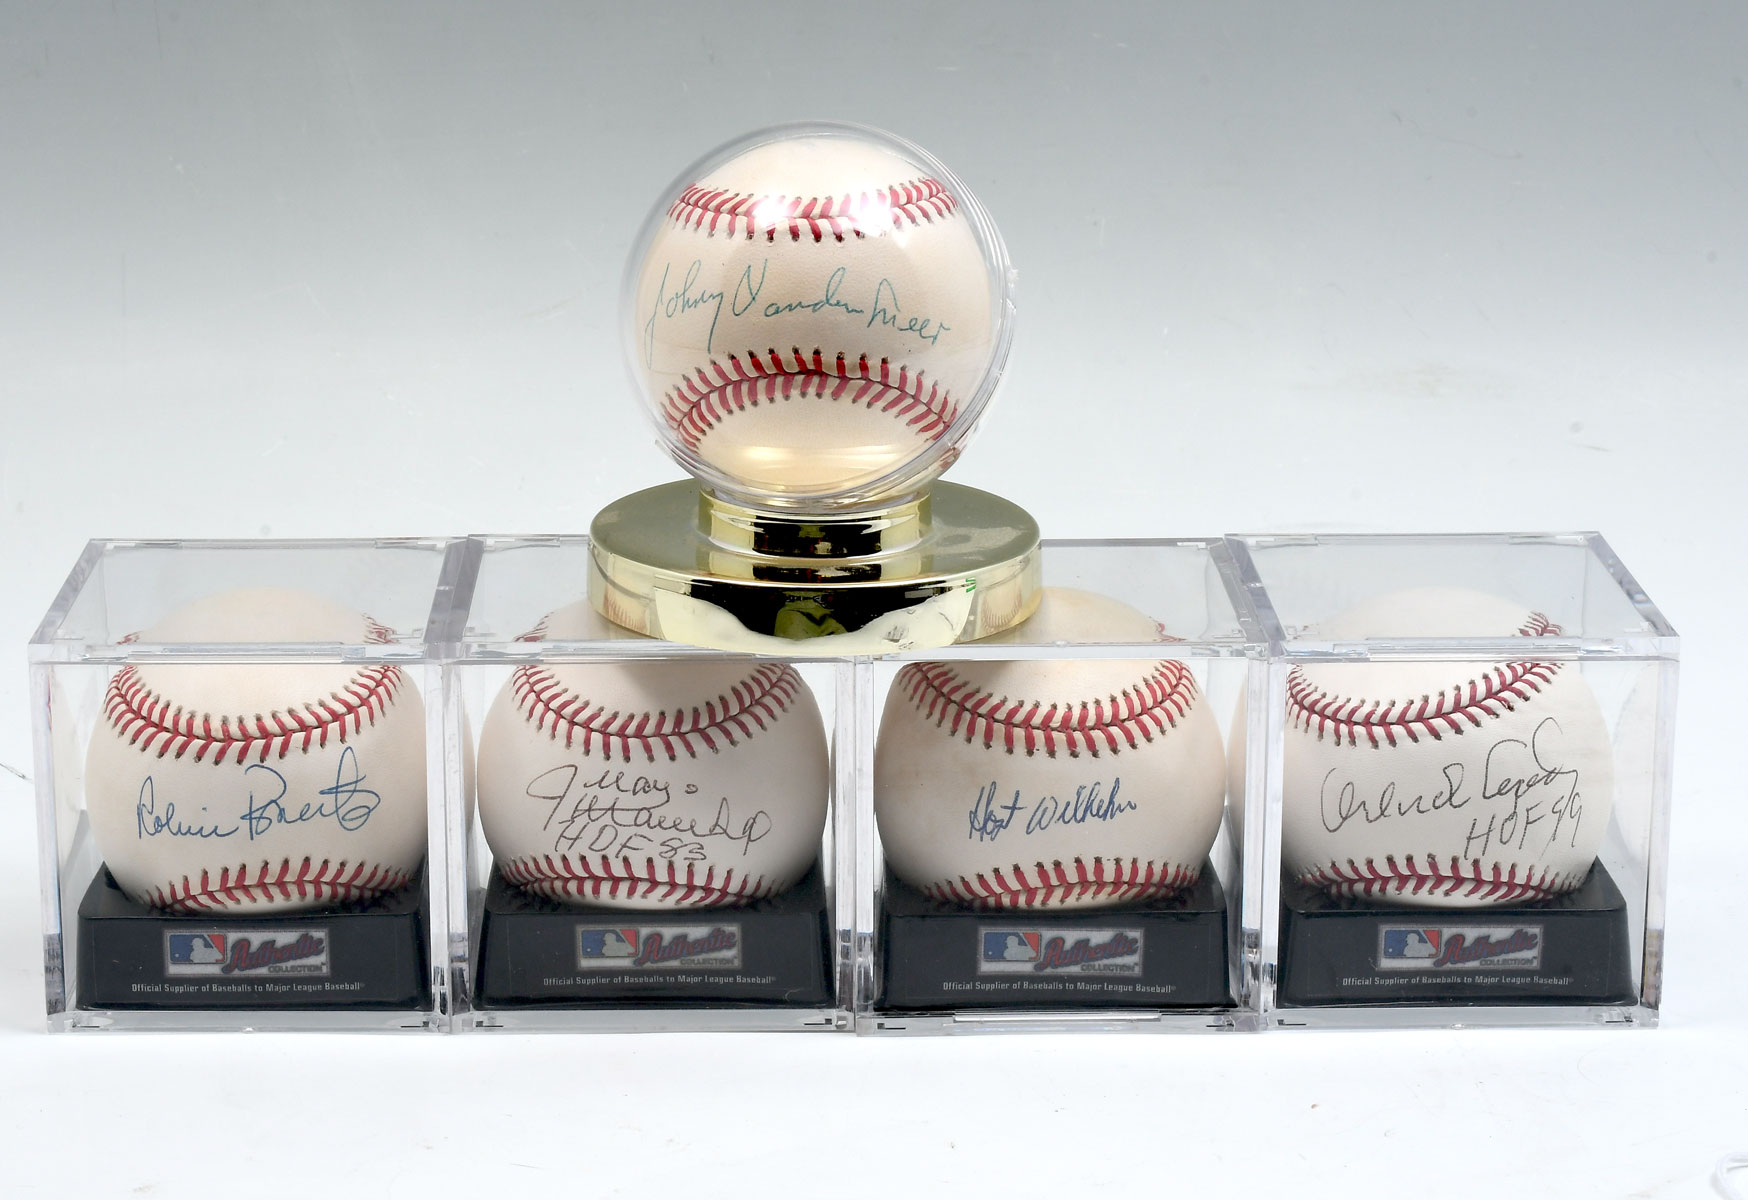 FIVE AUTOGRAPHED MLB BASEBALLS: Five